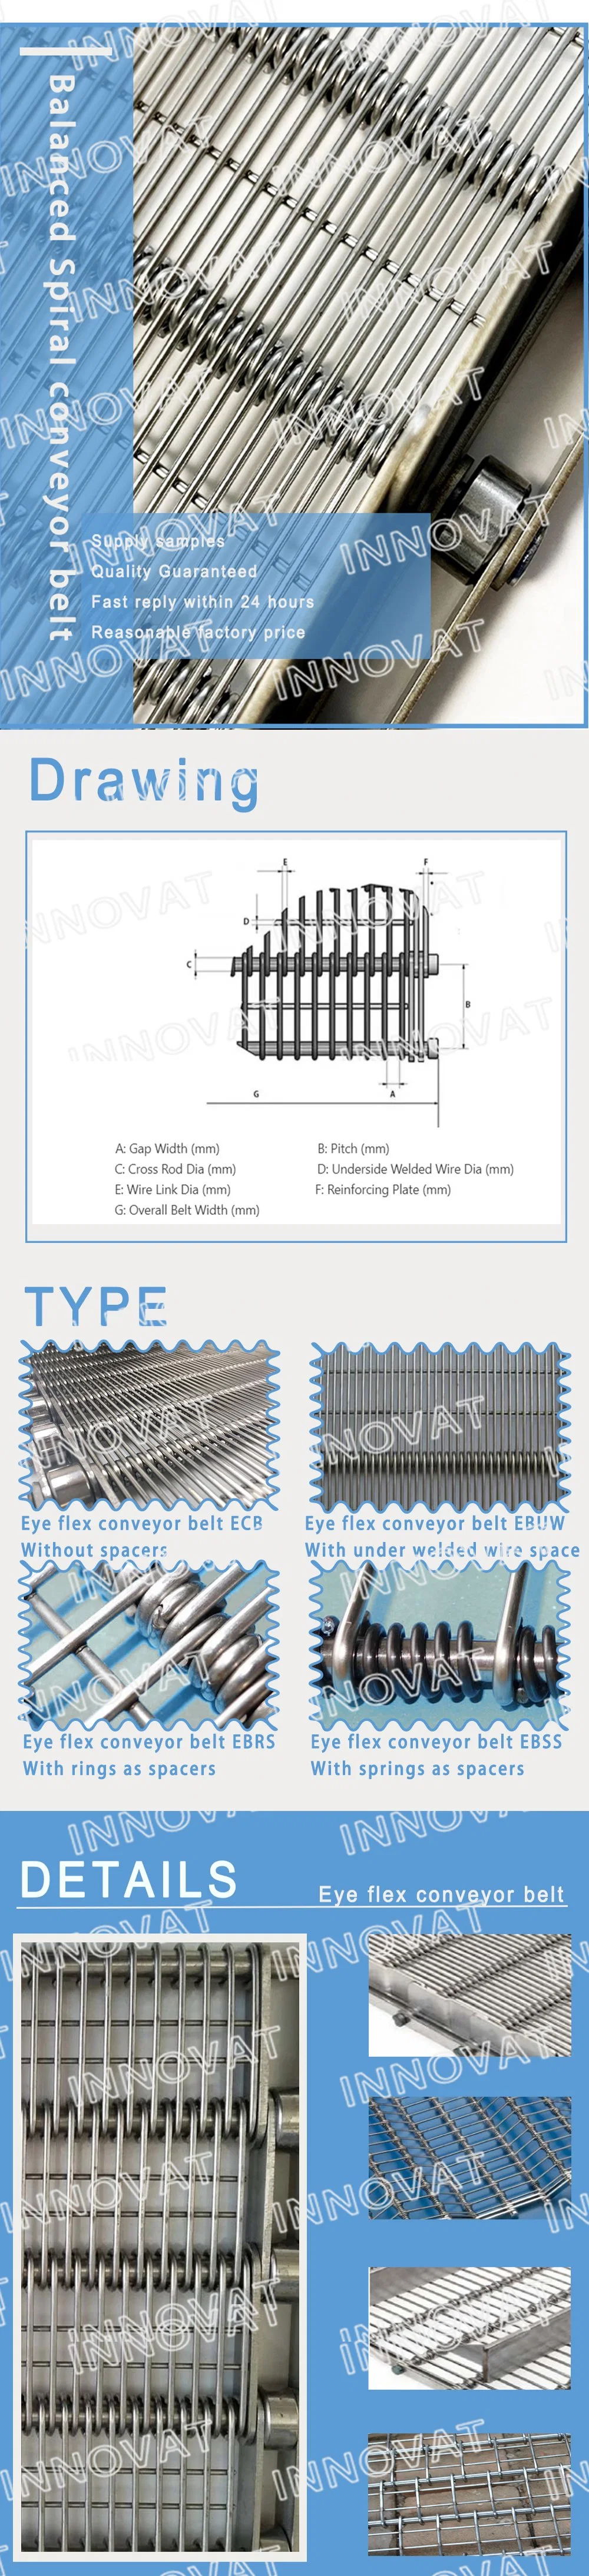 Eye Link Conveyor Belt System with Chain Roller SUS 304 /316 Stainless Steel Conveyor Belt Food or Sea Fish Usage PVC Conveyor Belt Mesh Belt